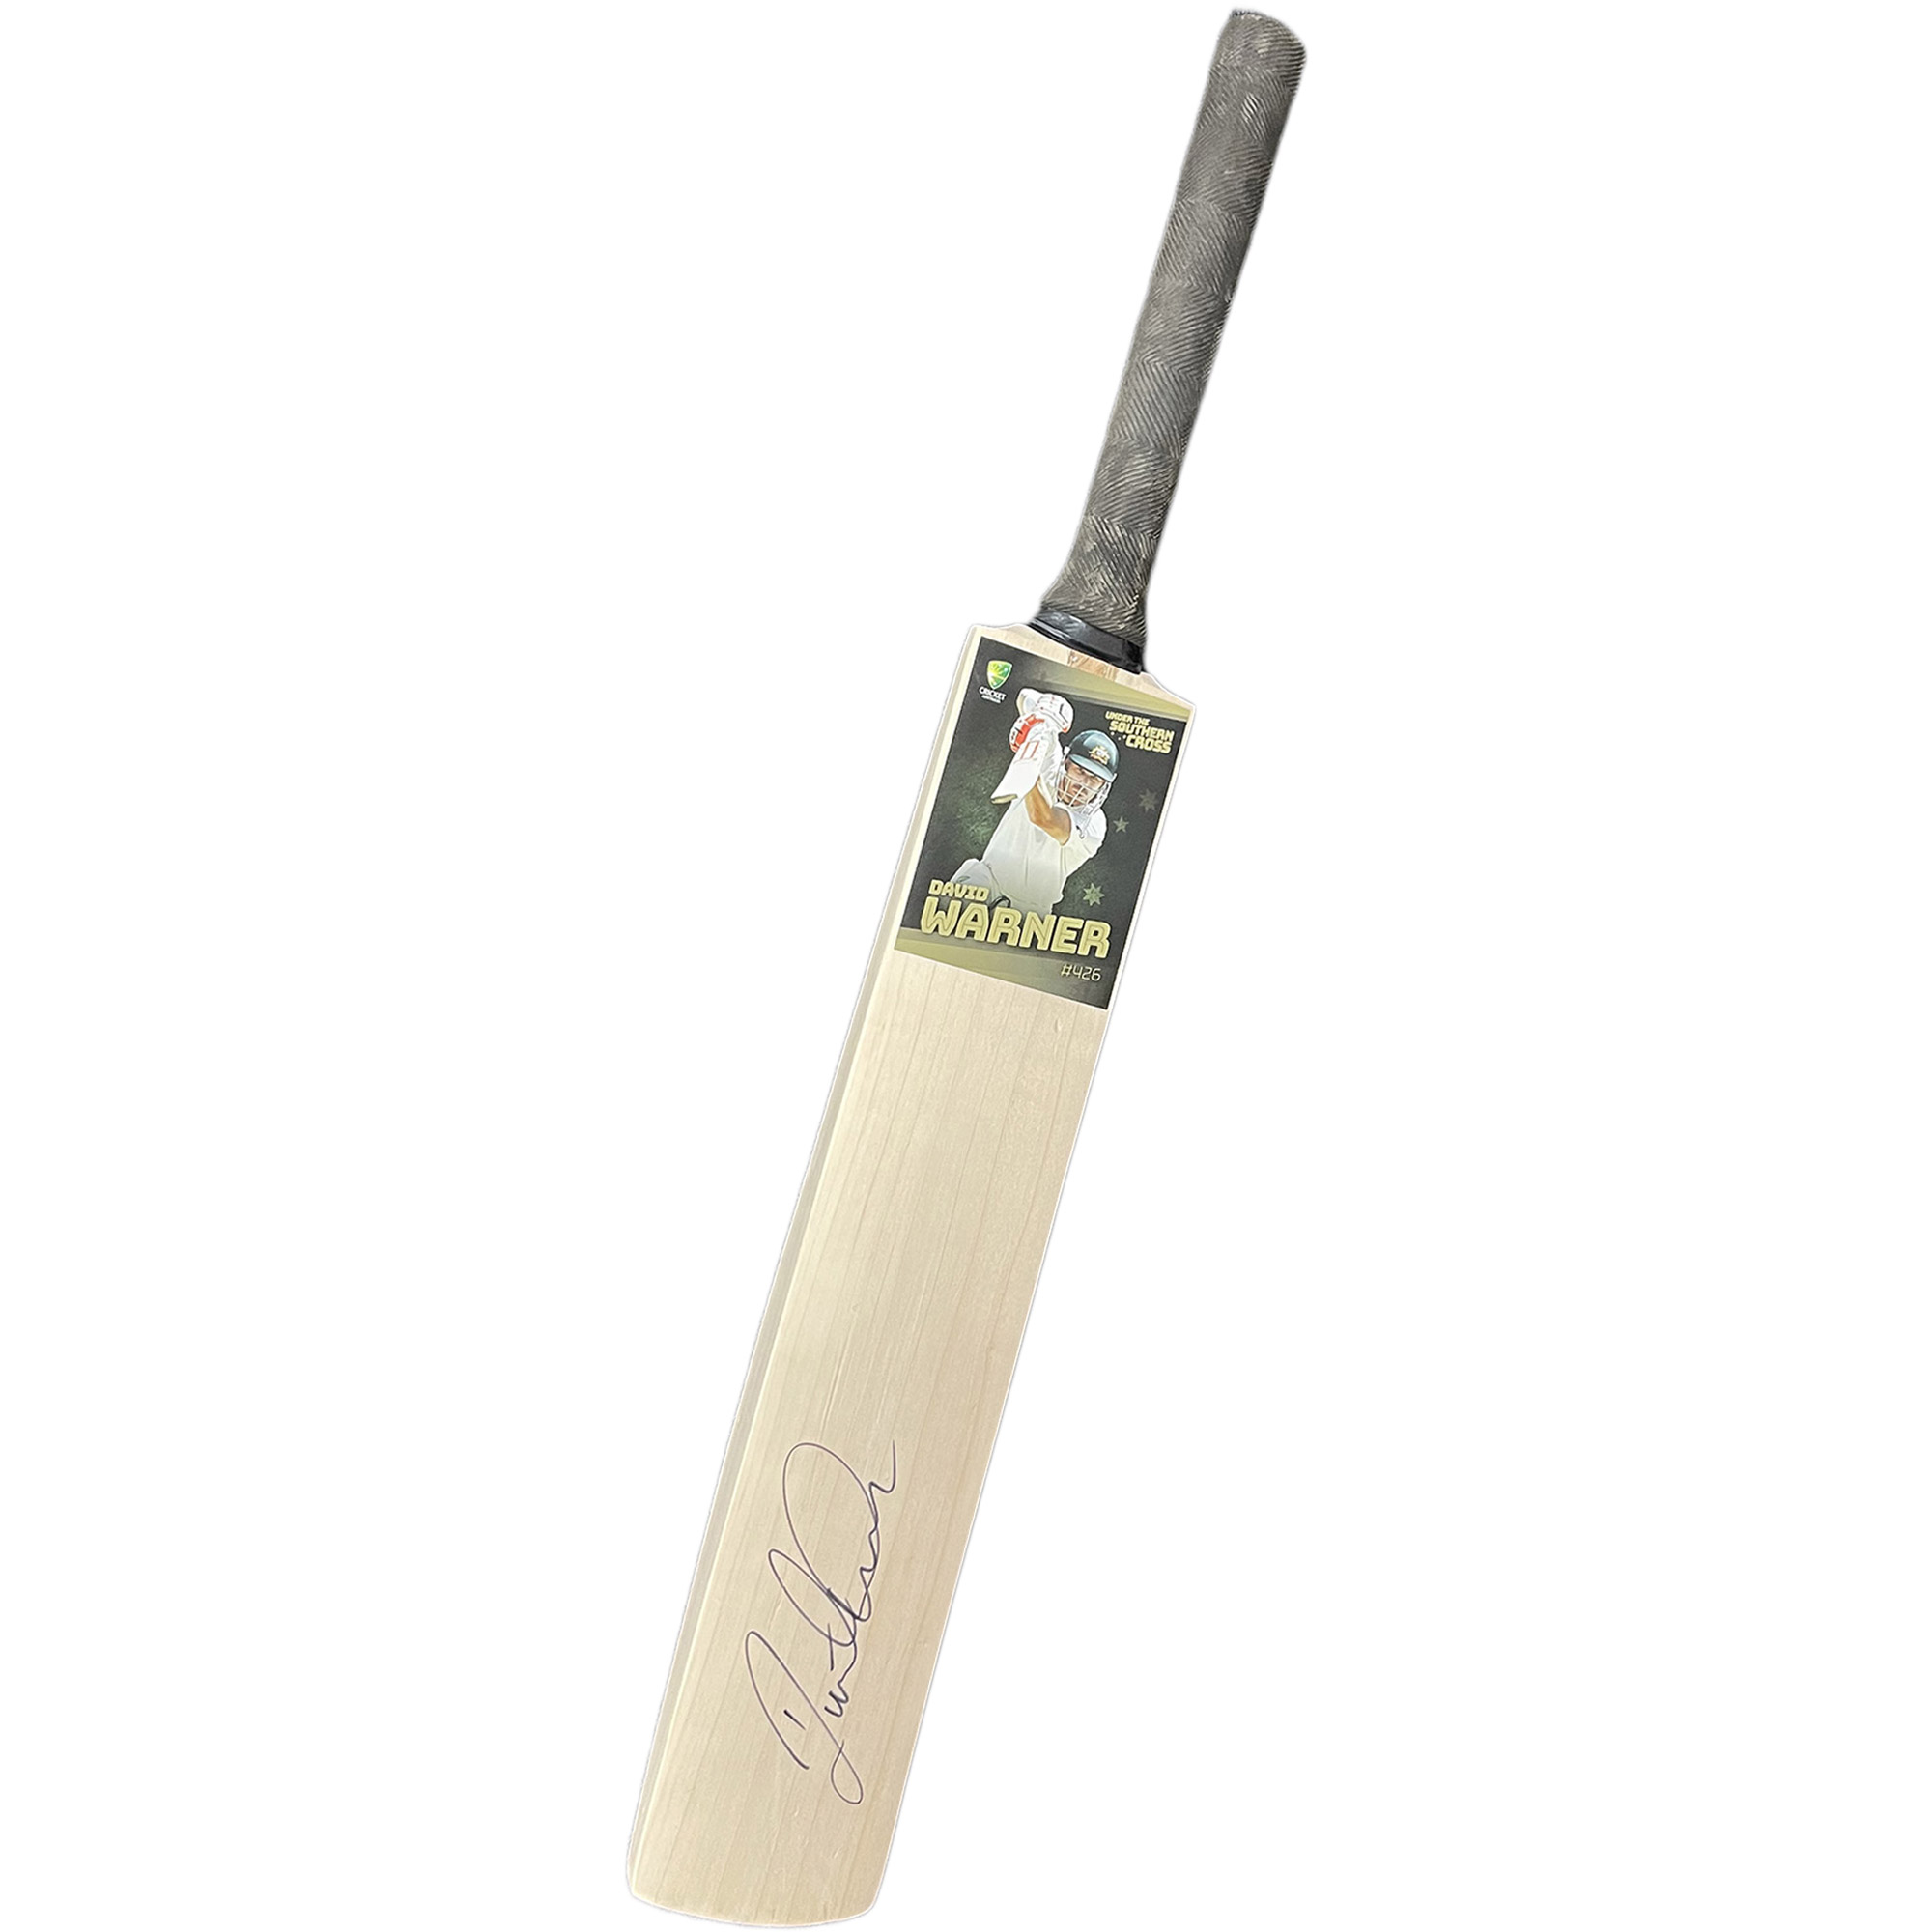 Cricket - David Warner Signed Cricket Bat, Taylormade Memorabilia